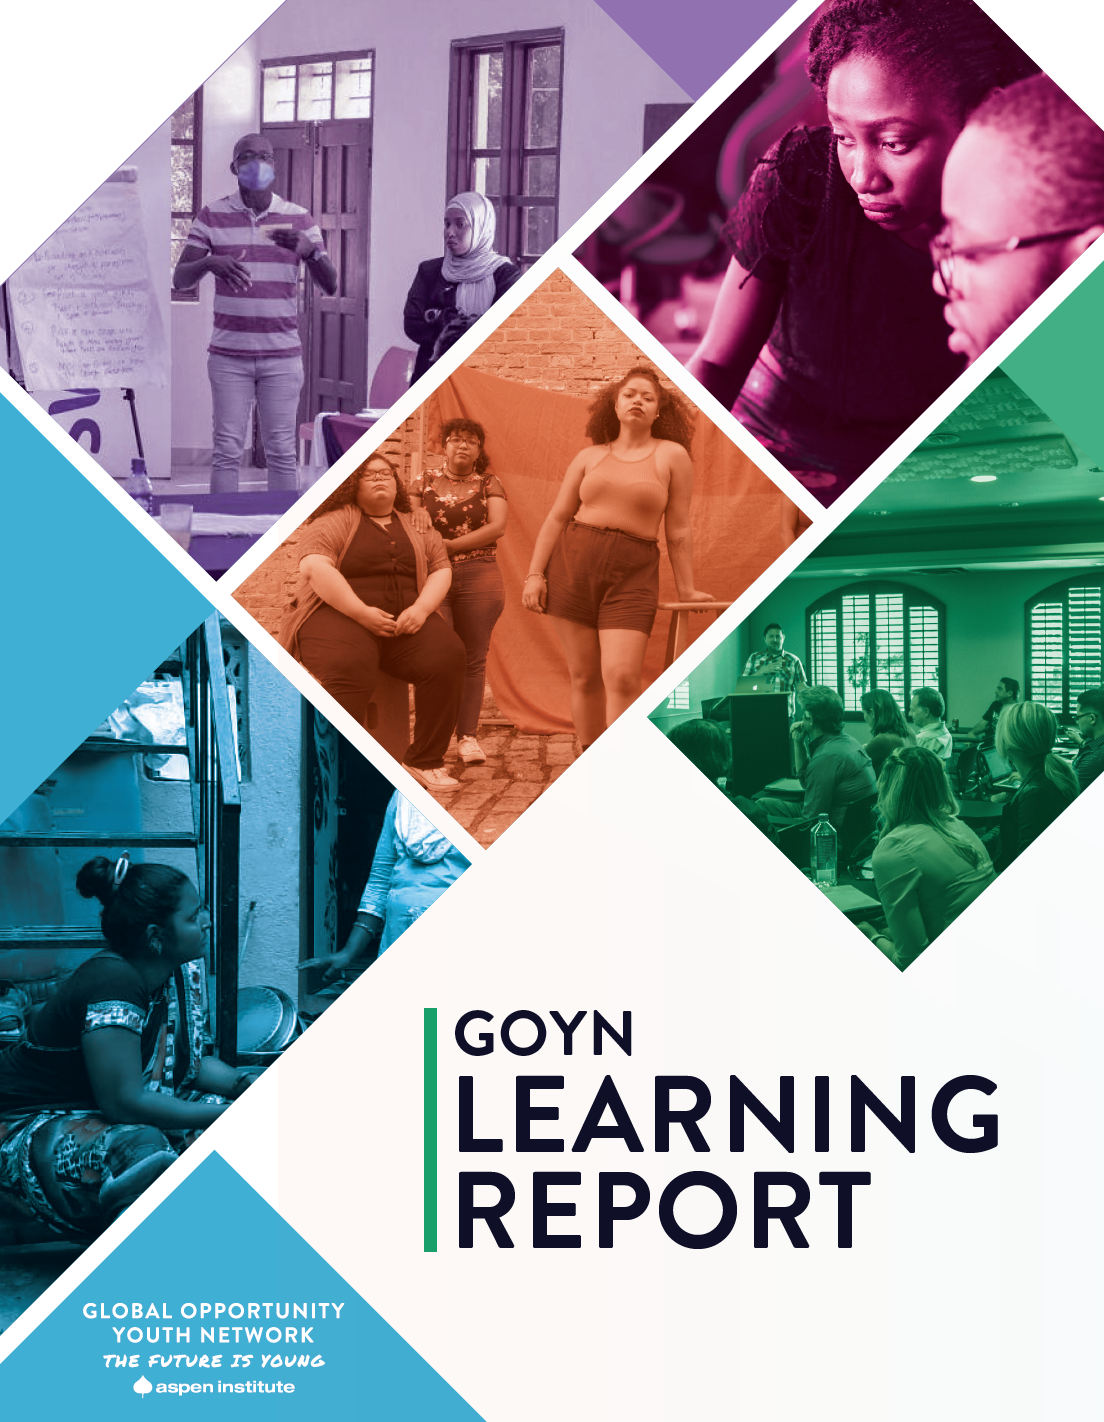 GOYN Learning Report